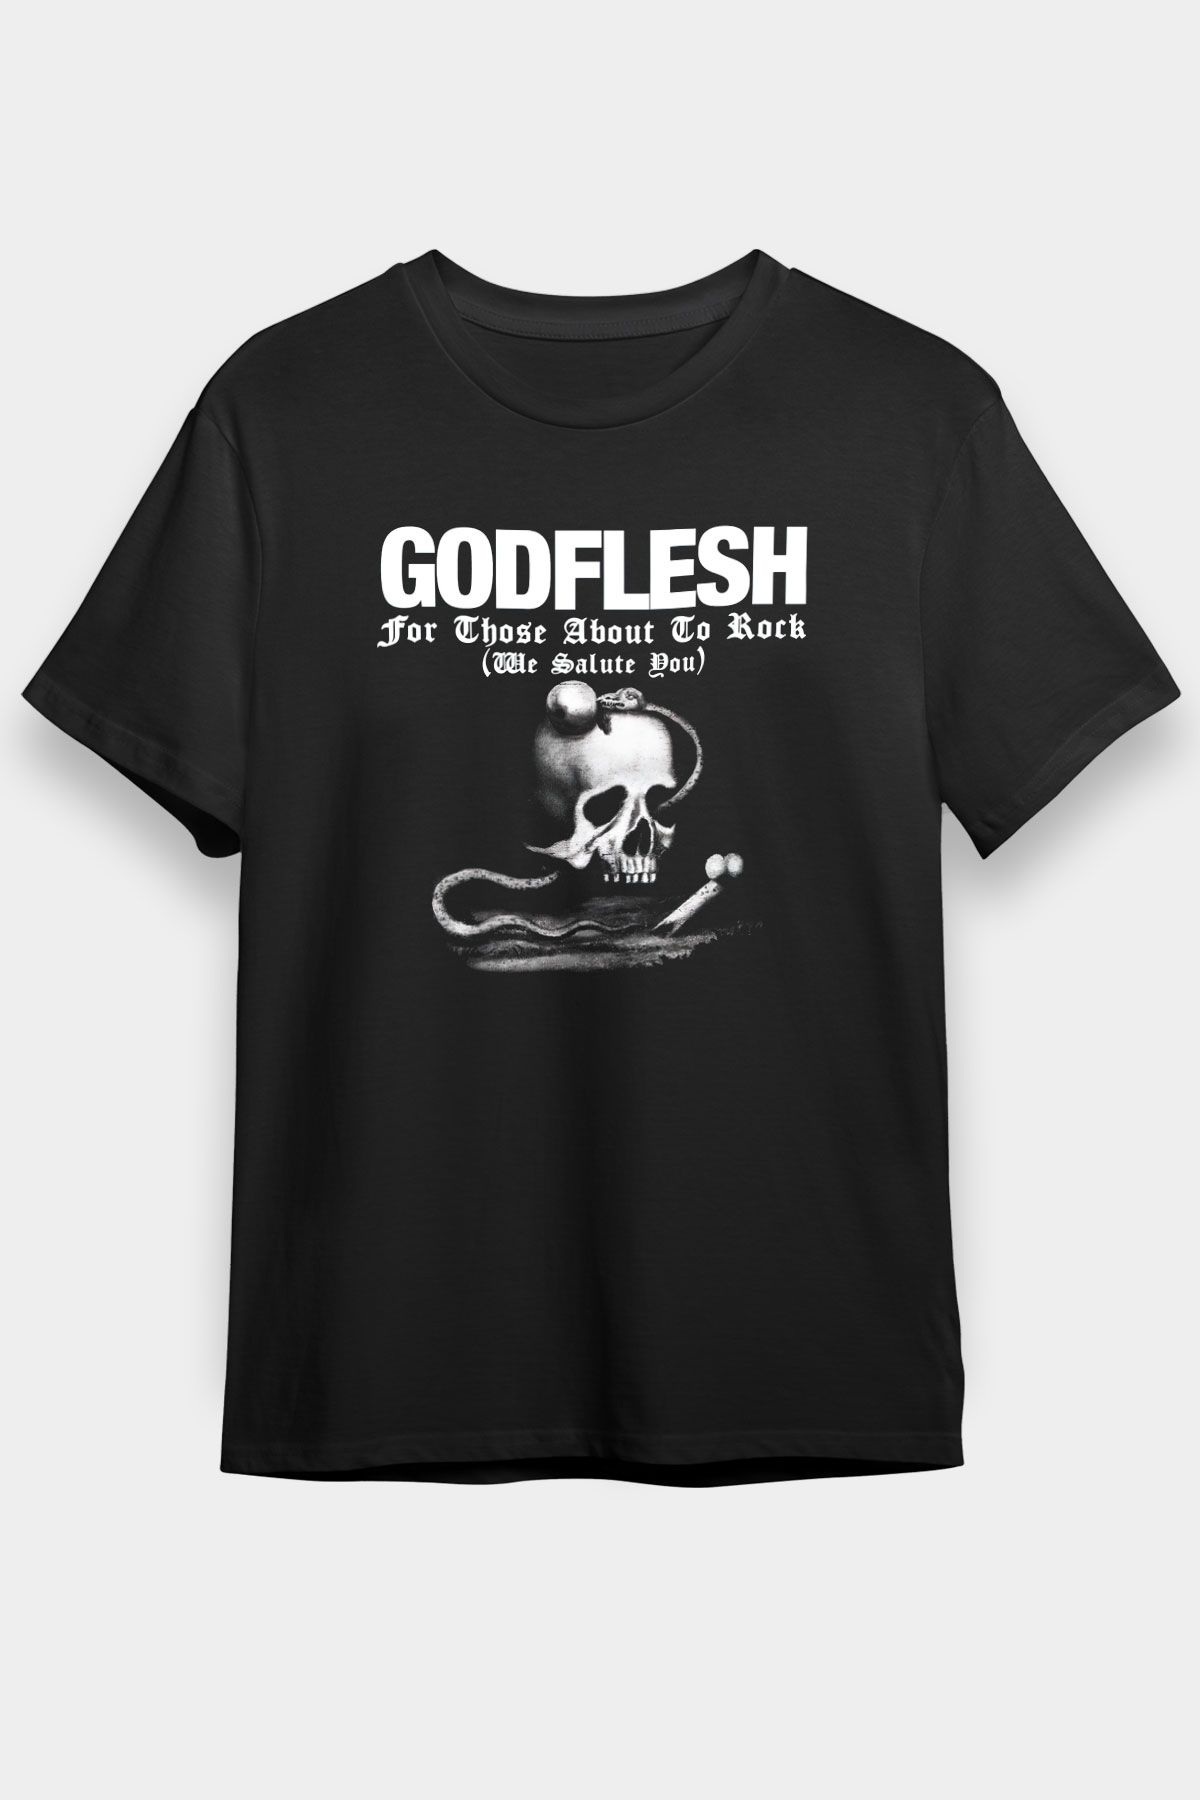 Godflesh T shirt, Music Band ,Unisex Tshirt 08